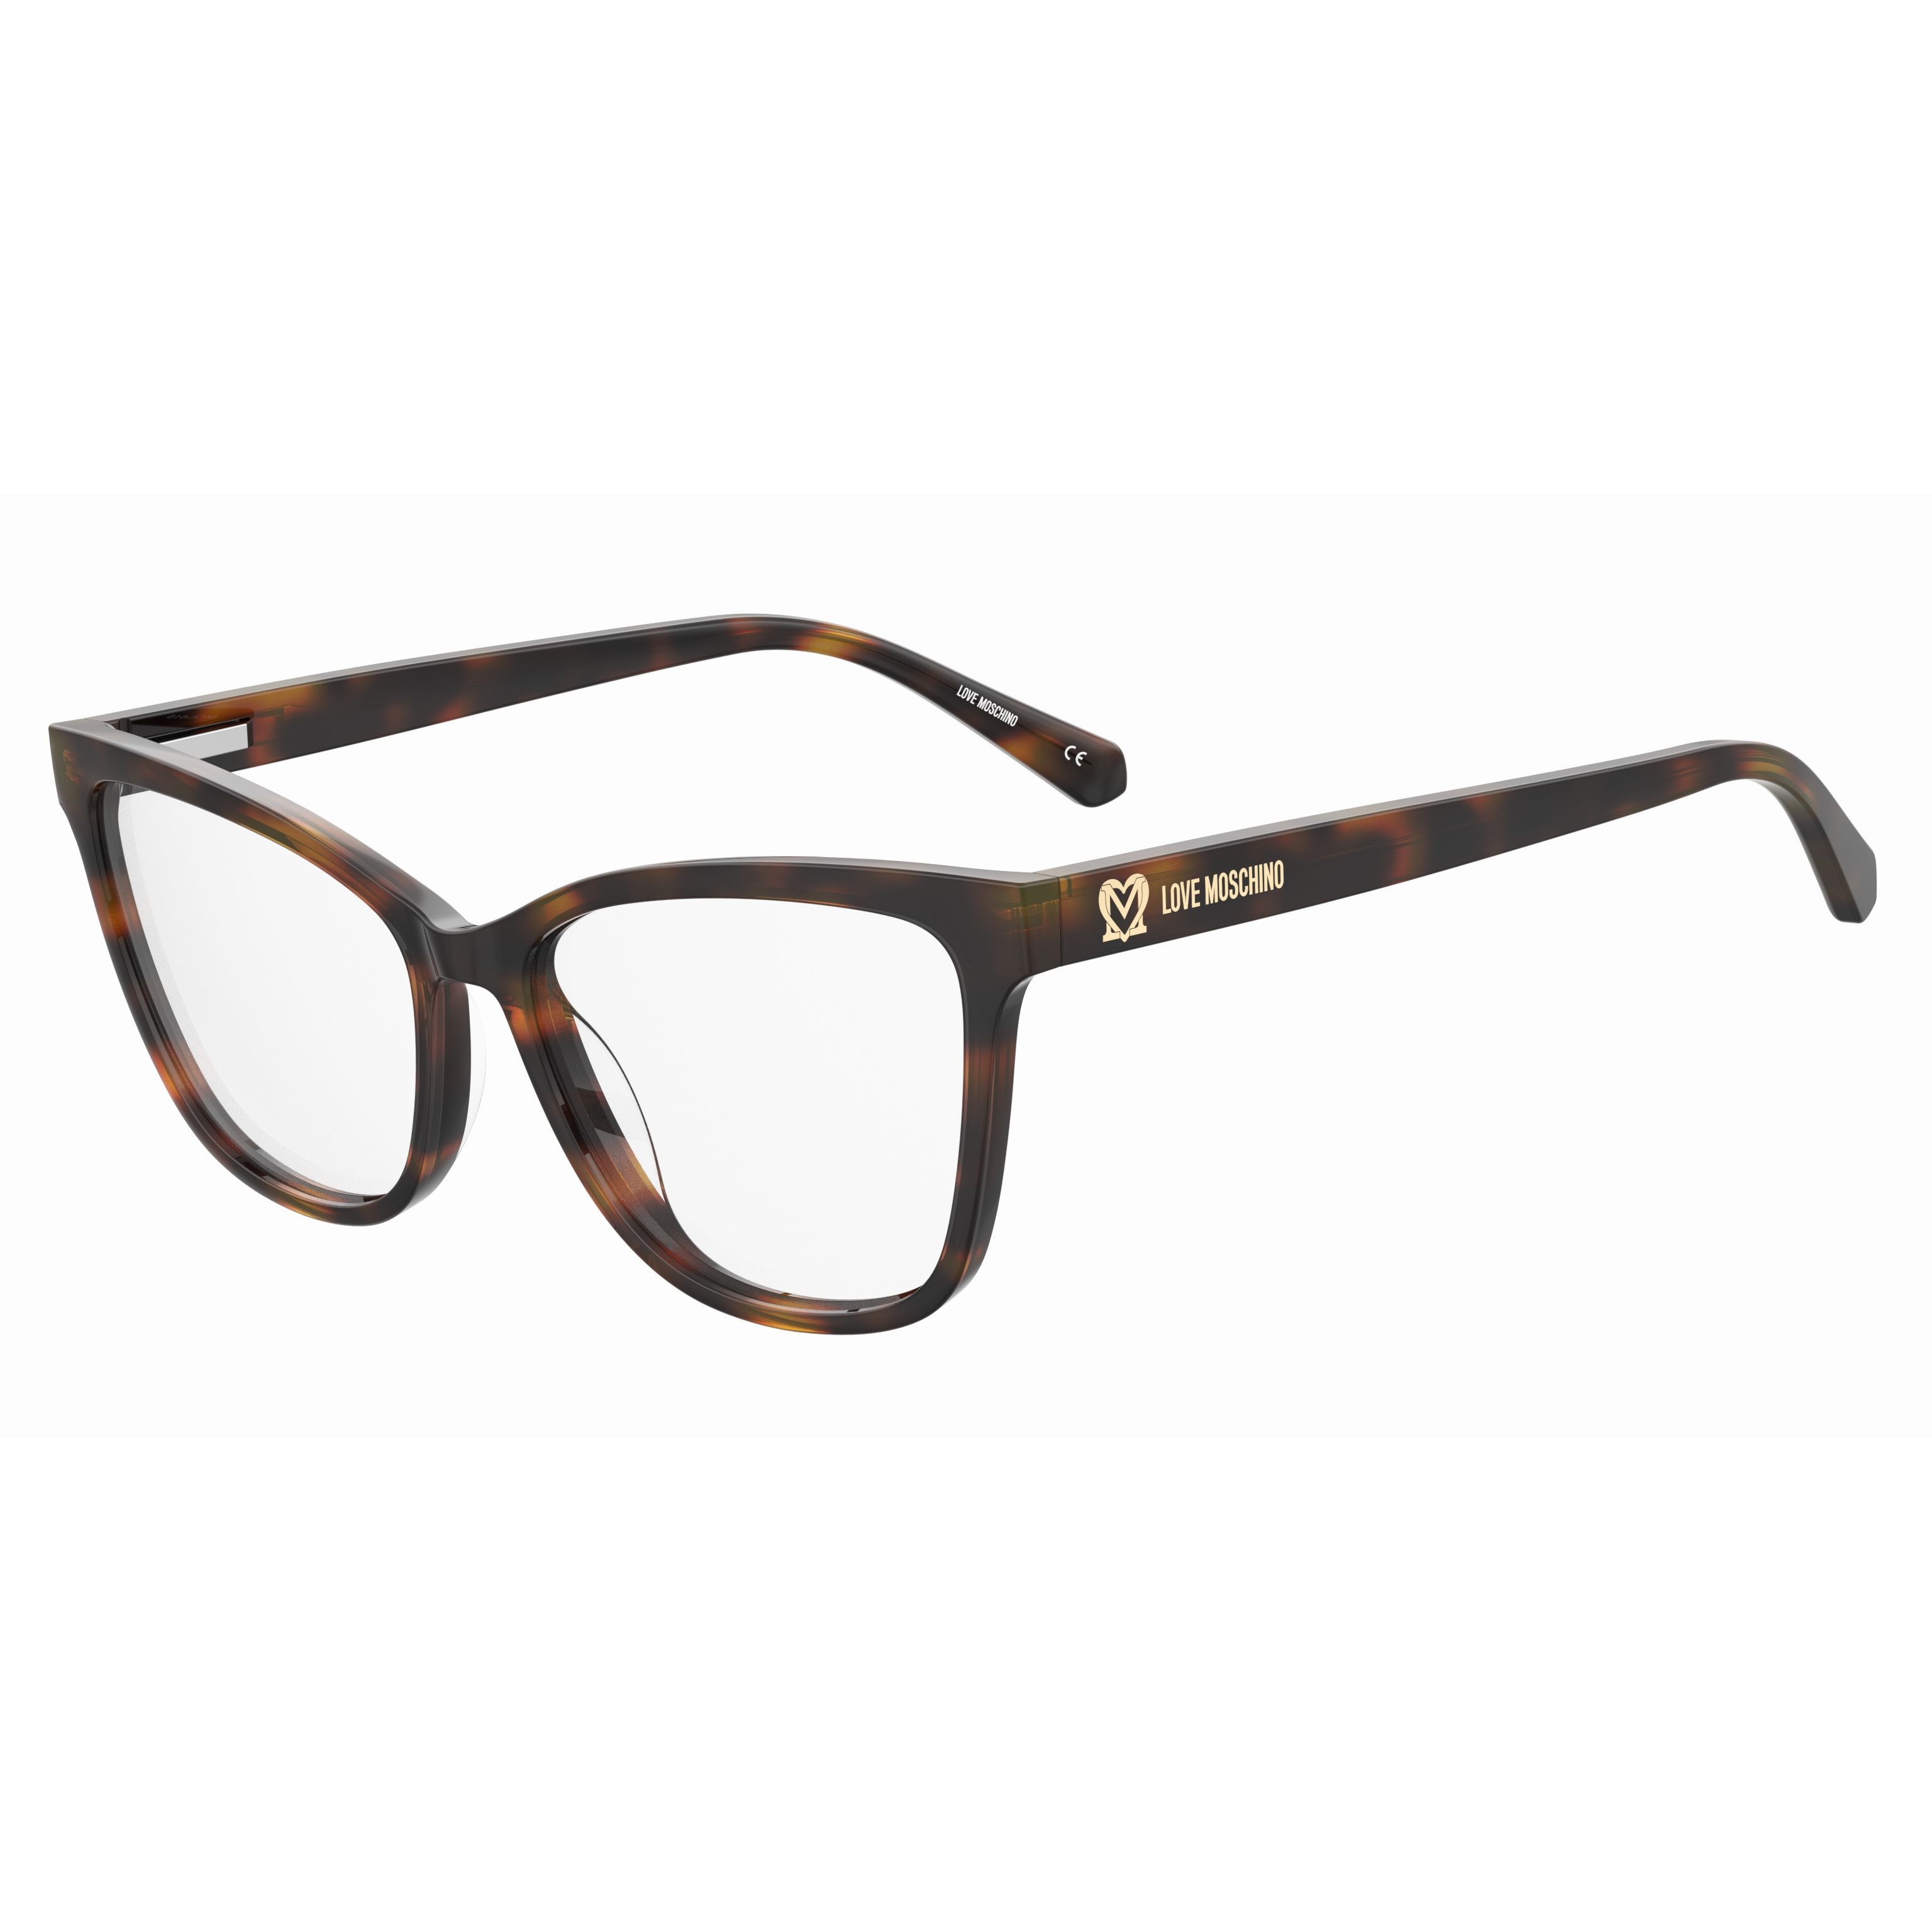 MOL615 Cateye Eyeglasses 05L - size 54